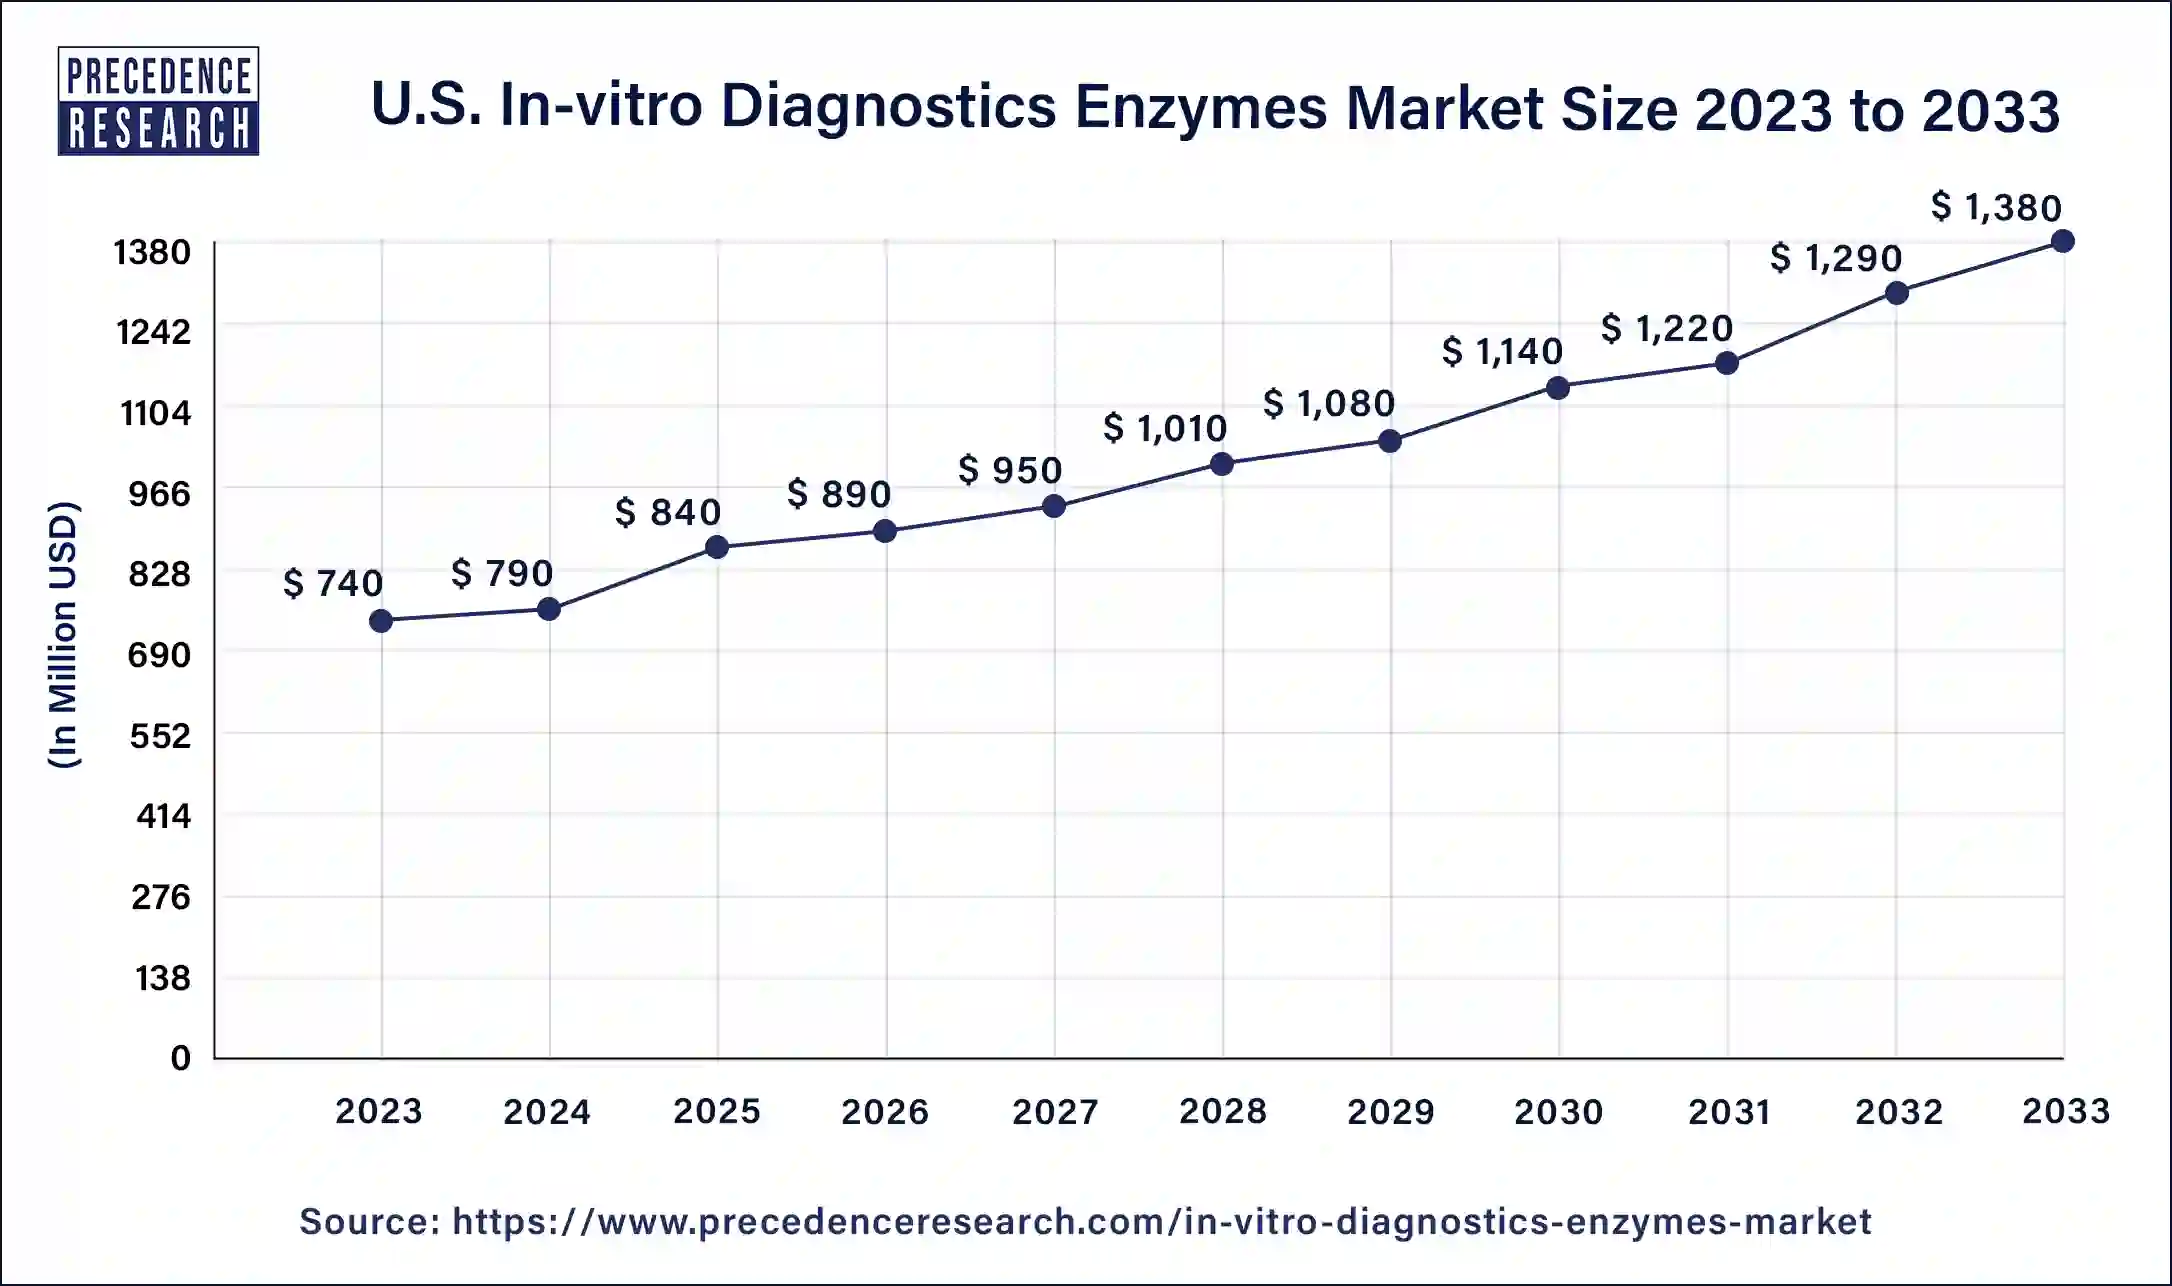 U.S. In-vitro Diagnostics Enzymes Market Size 2024 to 2033